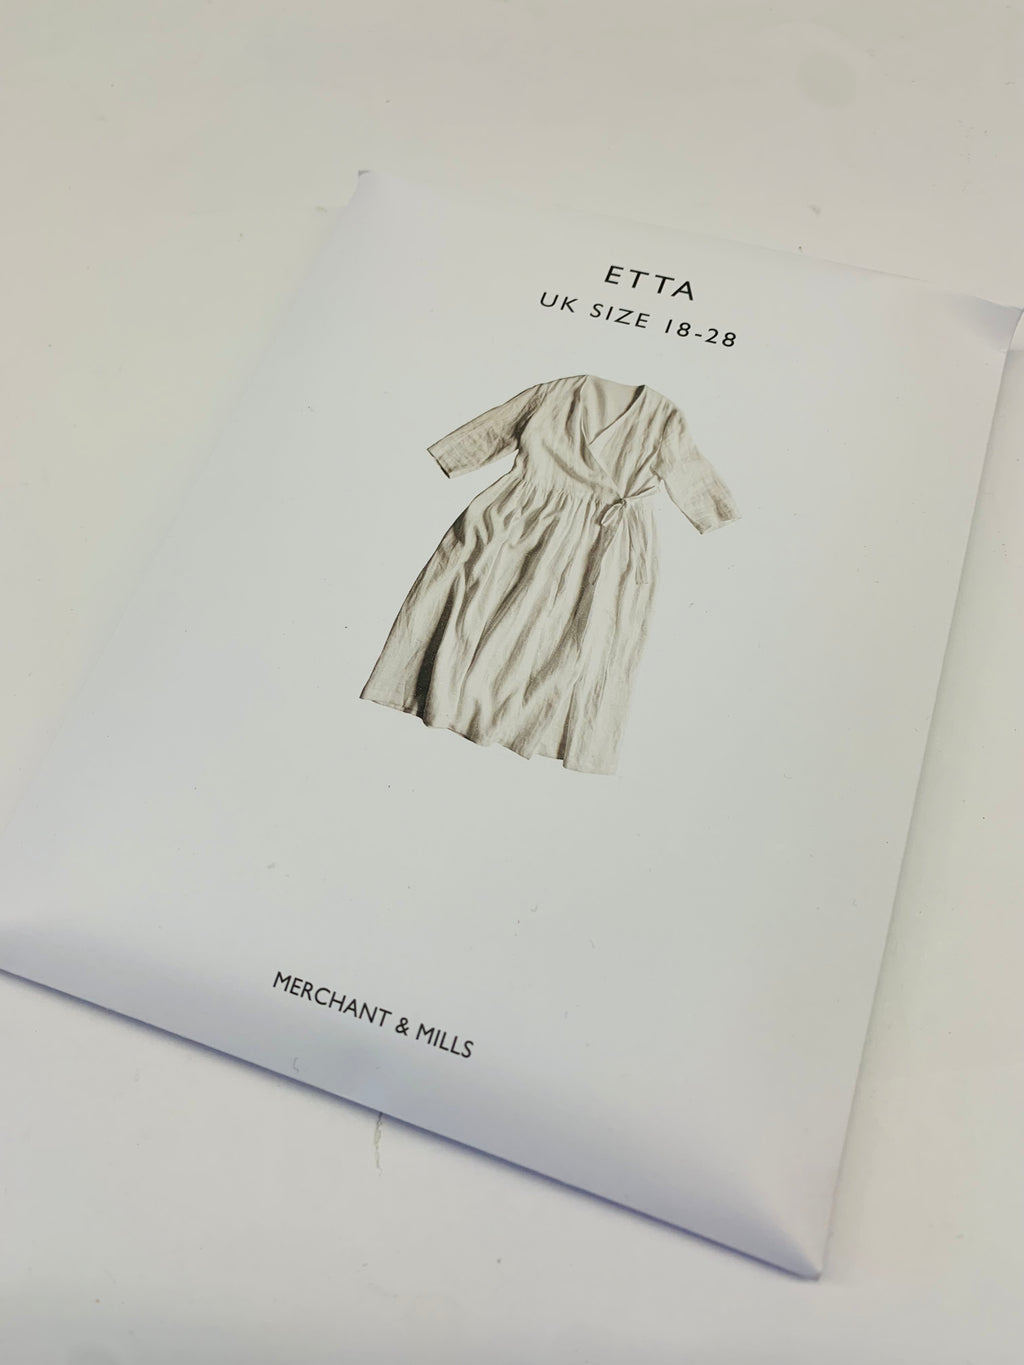 Merchant & Mills Etta Sewing Pattern: Size 18-28